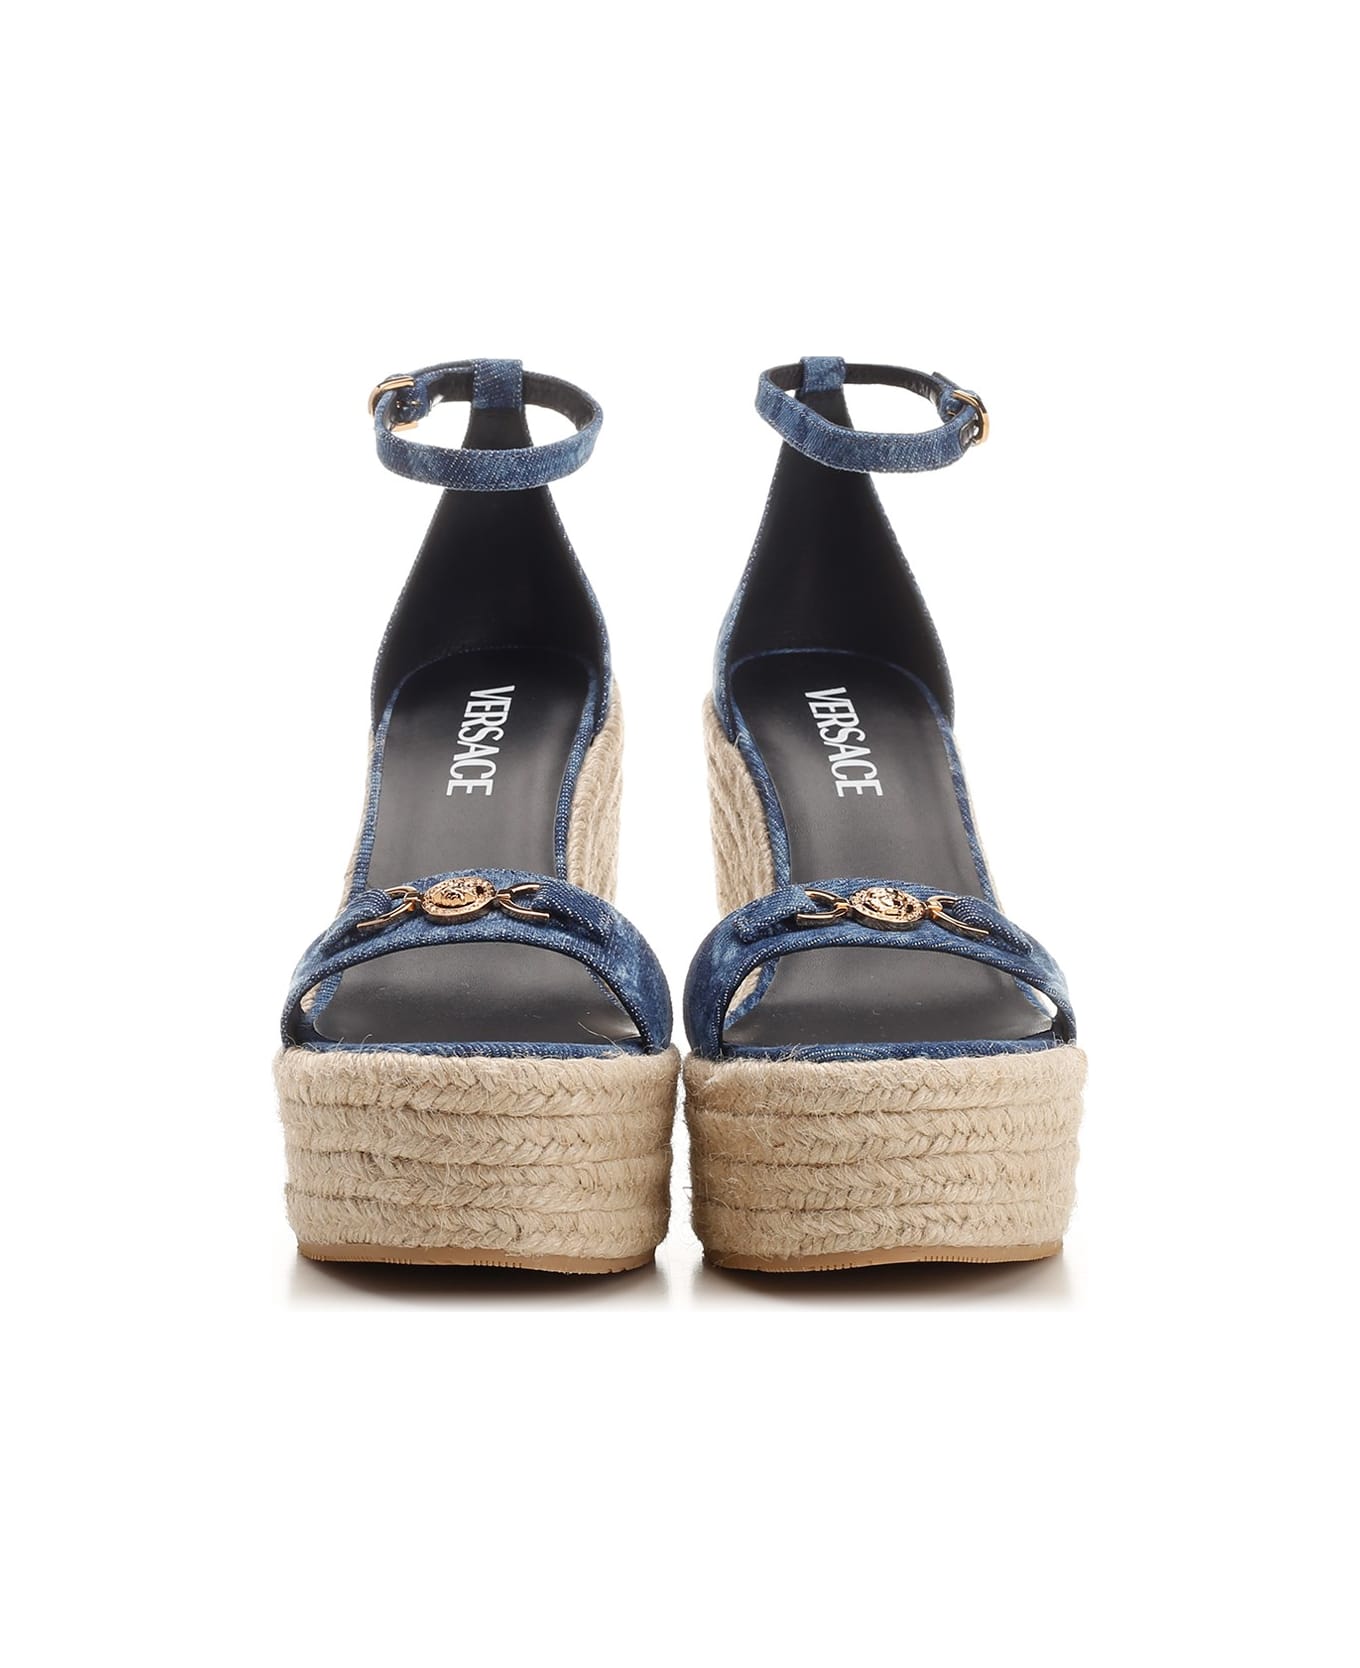 Versace Straw Wedge Sandals - BlueGold サンダル